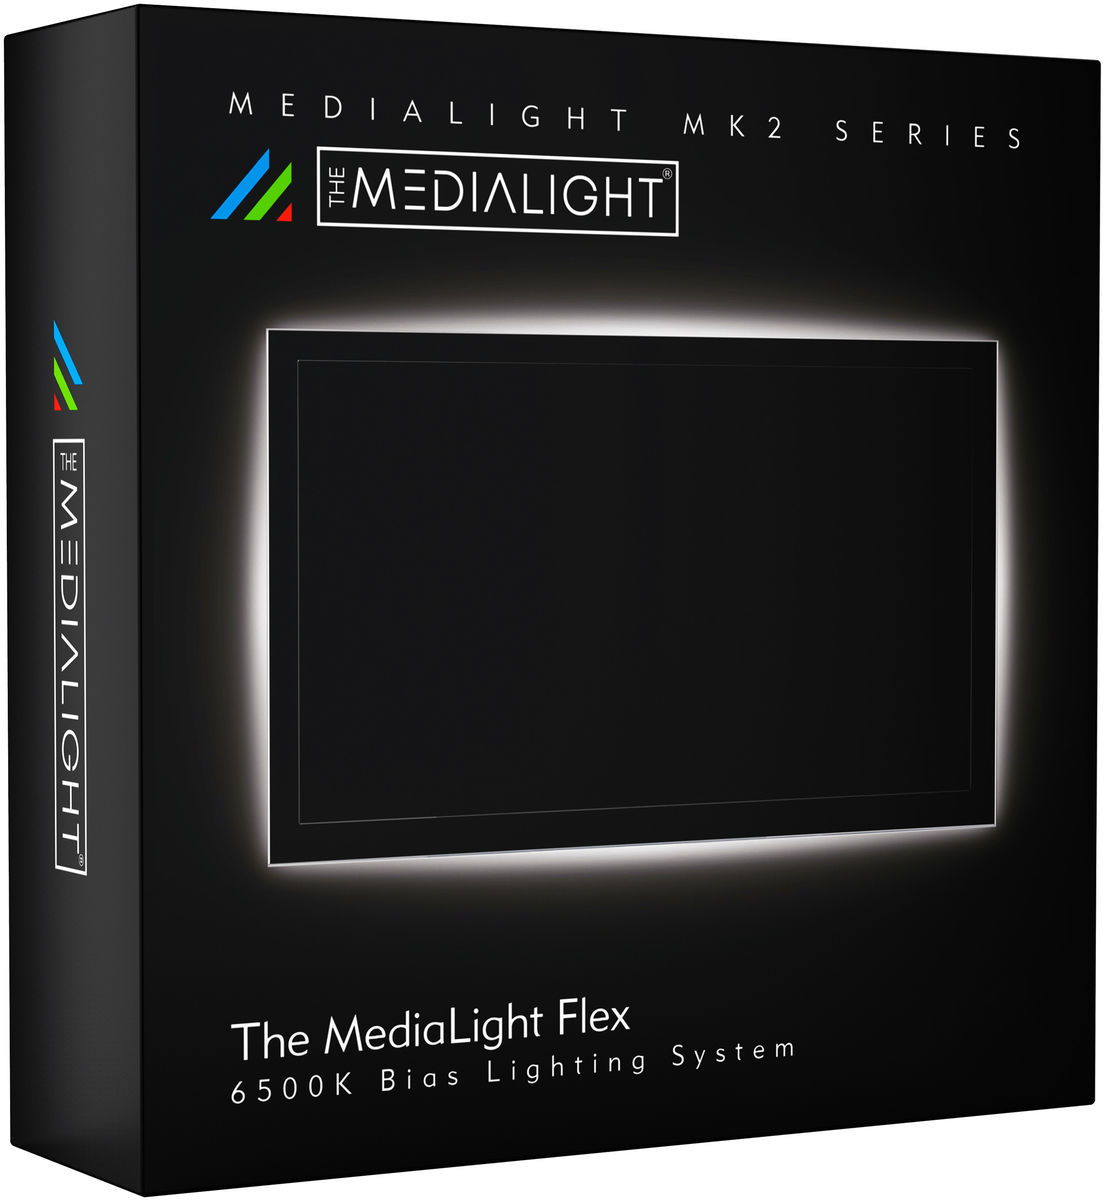 Accessoires TV Bias Lighting Medialight MK2 Flex (3 m)